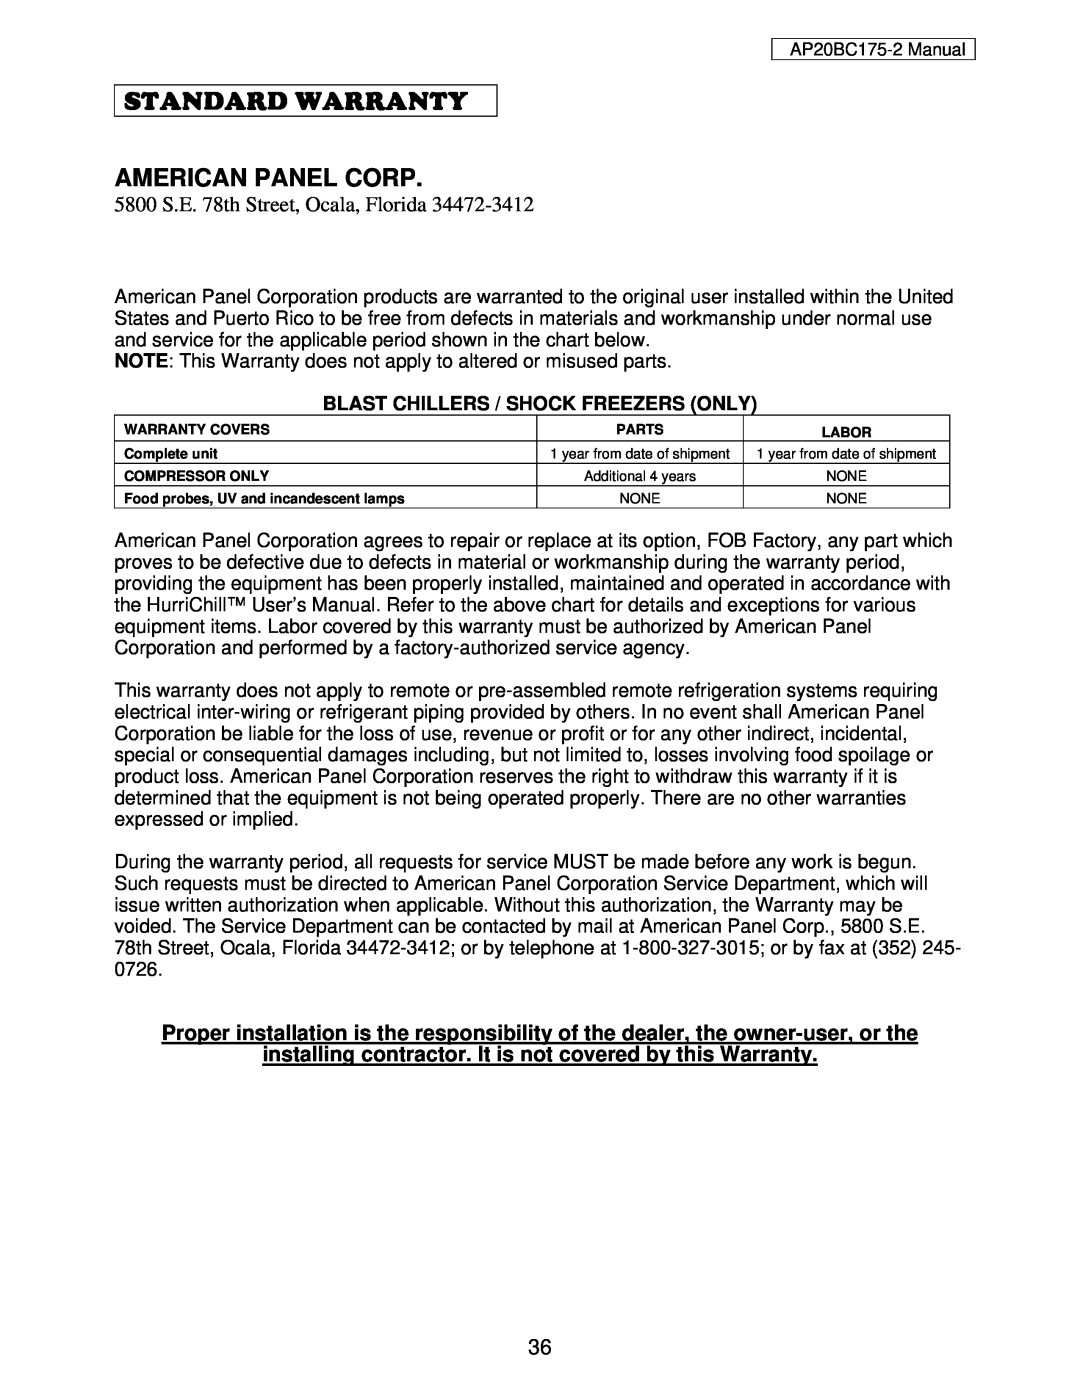 American Panel AP20BC175-2 user manual Standard Warranty, American Panel Corp, 5800 S.E. 78th Street, Ocala, Florida 